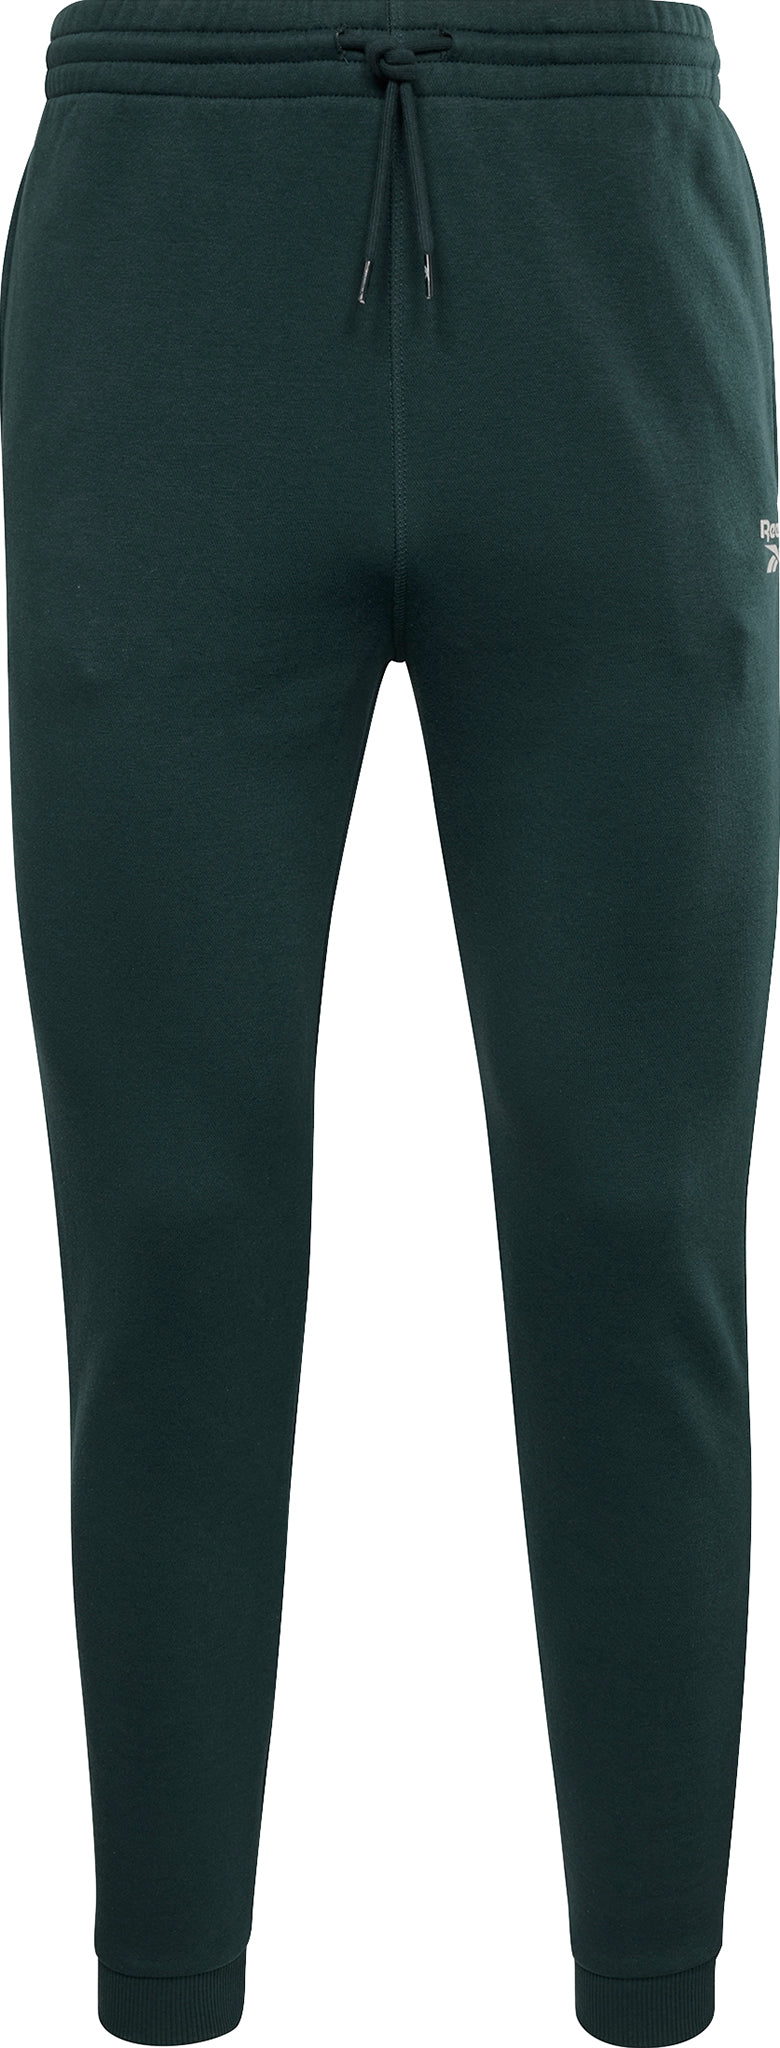 Jogging Reebok Identity Vector - Pantalons - Homme - Textile